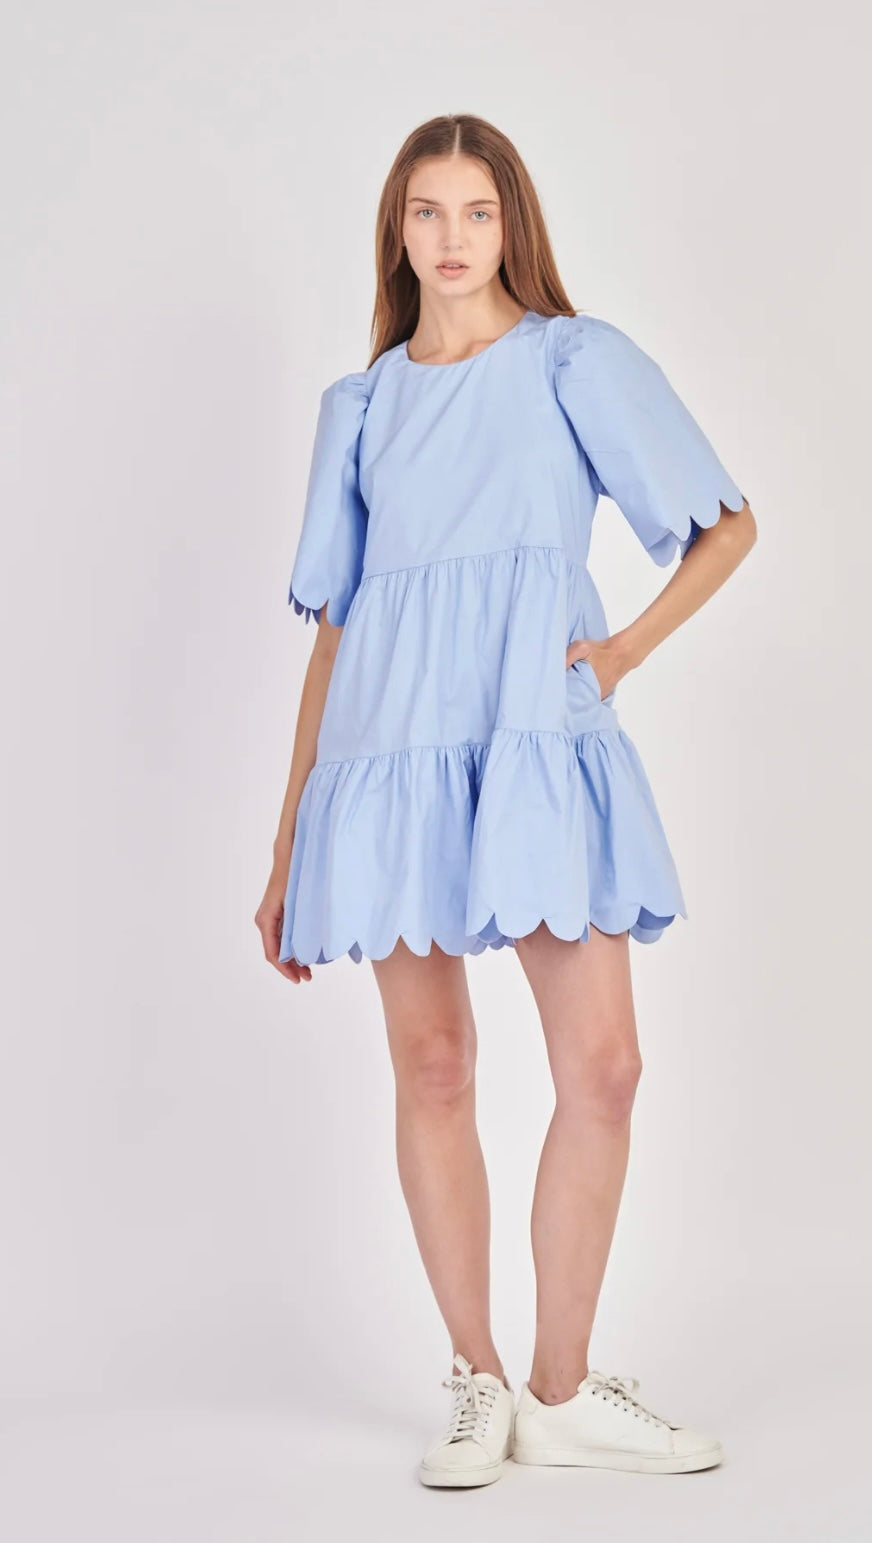 Blue Scallop Dress